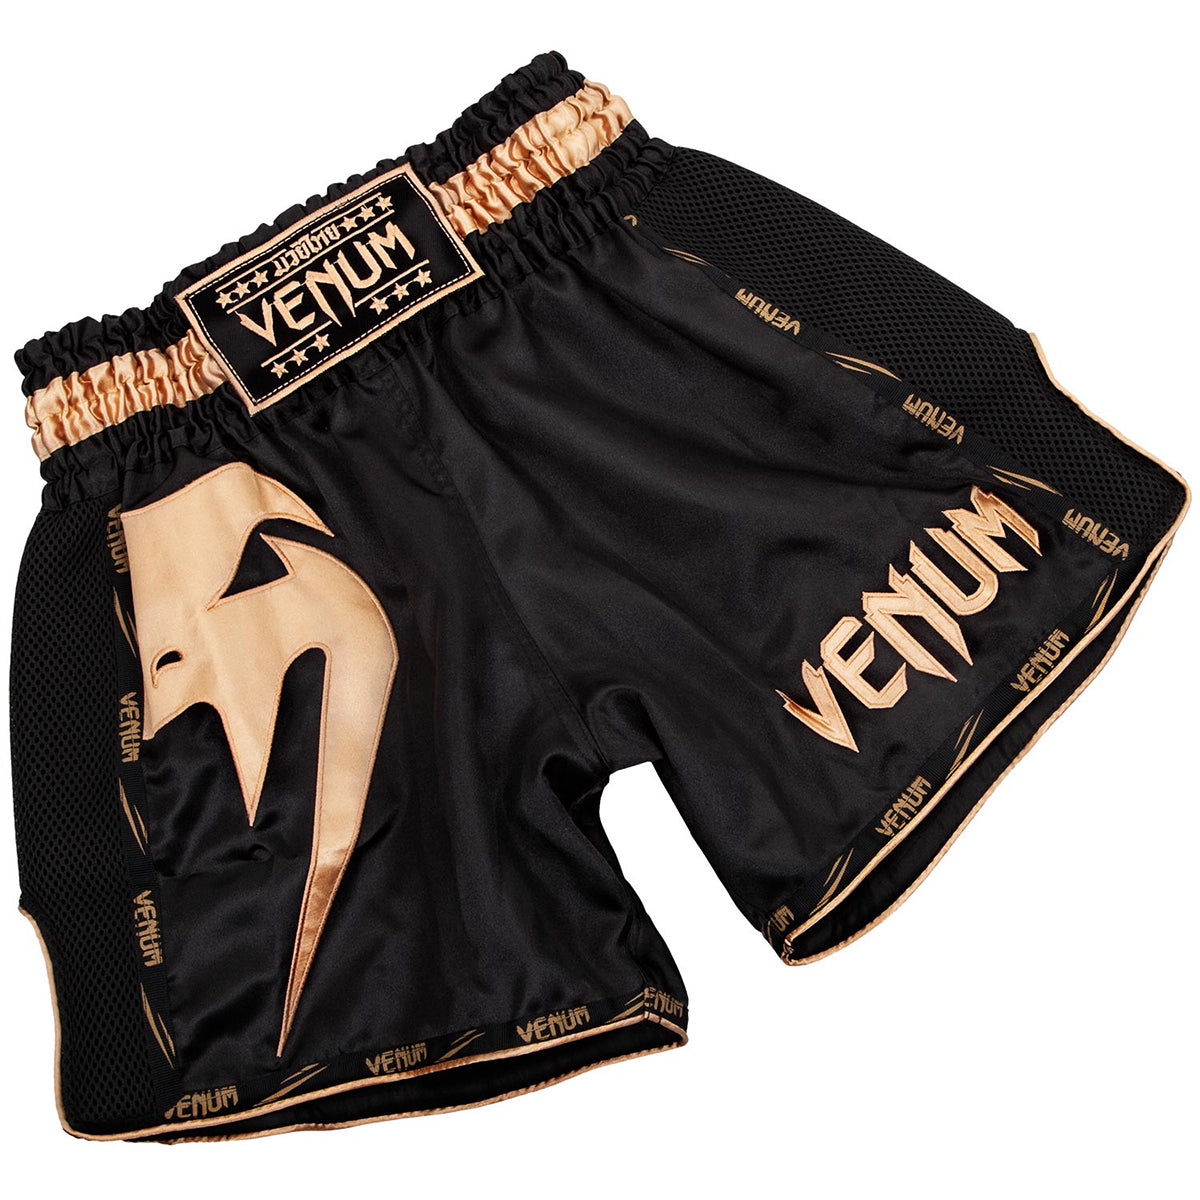 Venum Giant Lightweight Muay Thai Shorts - Black/Gold Venum